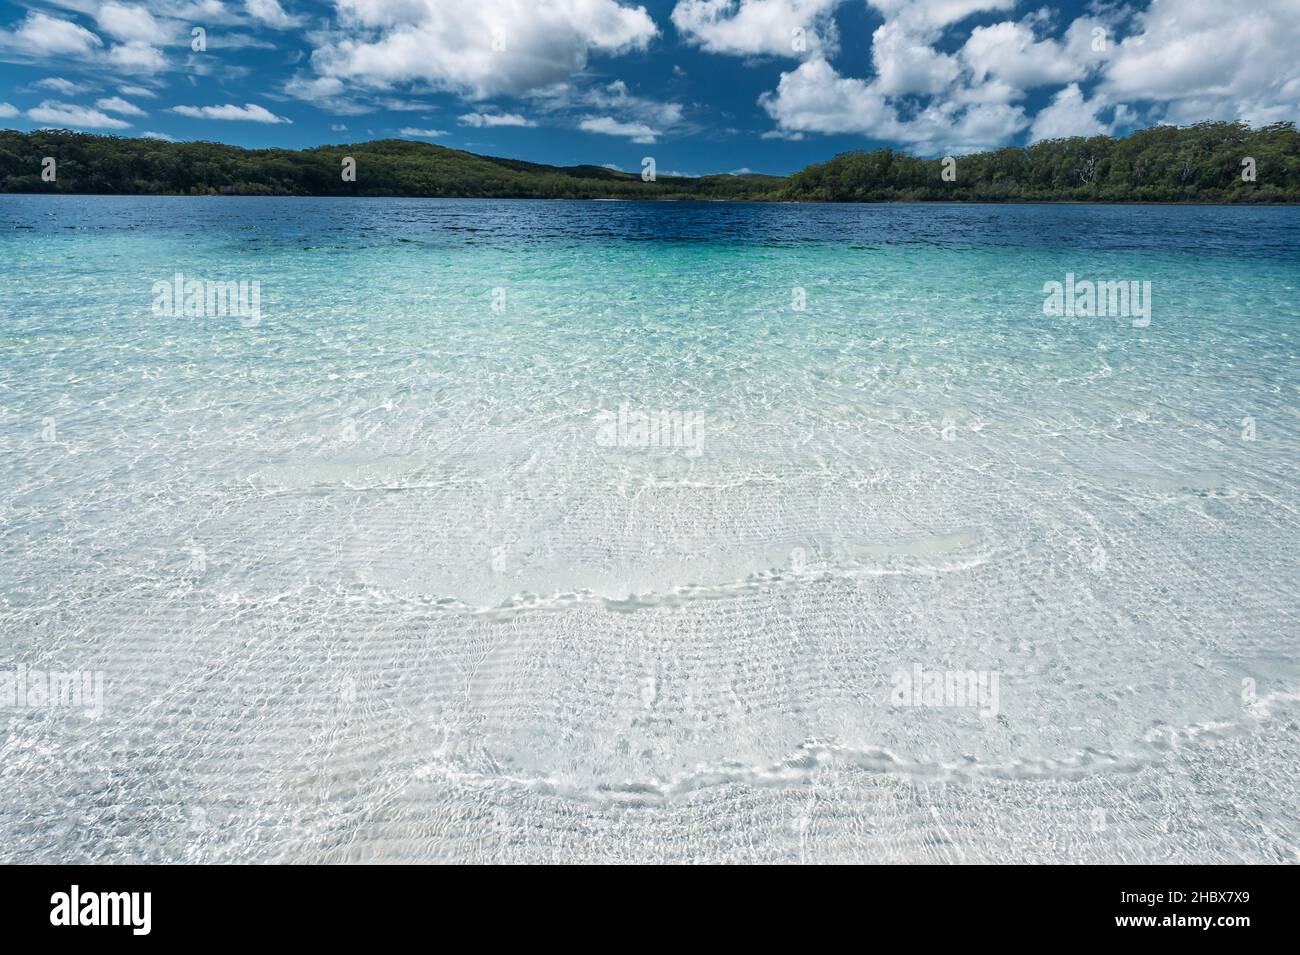 Outstanding Lake McKenzie on Fraser Island, world's largest sand island. Stock Photo